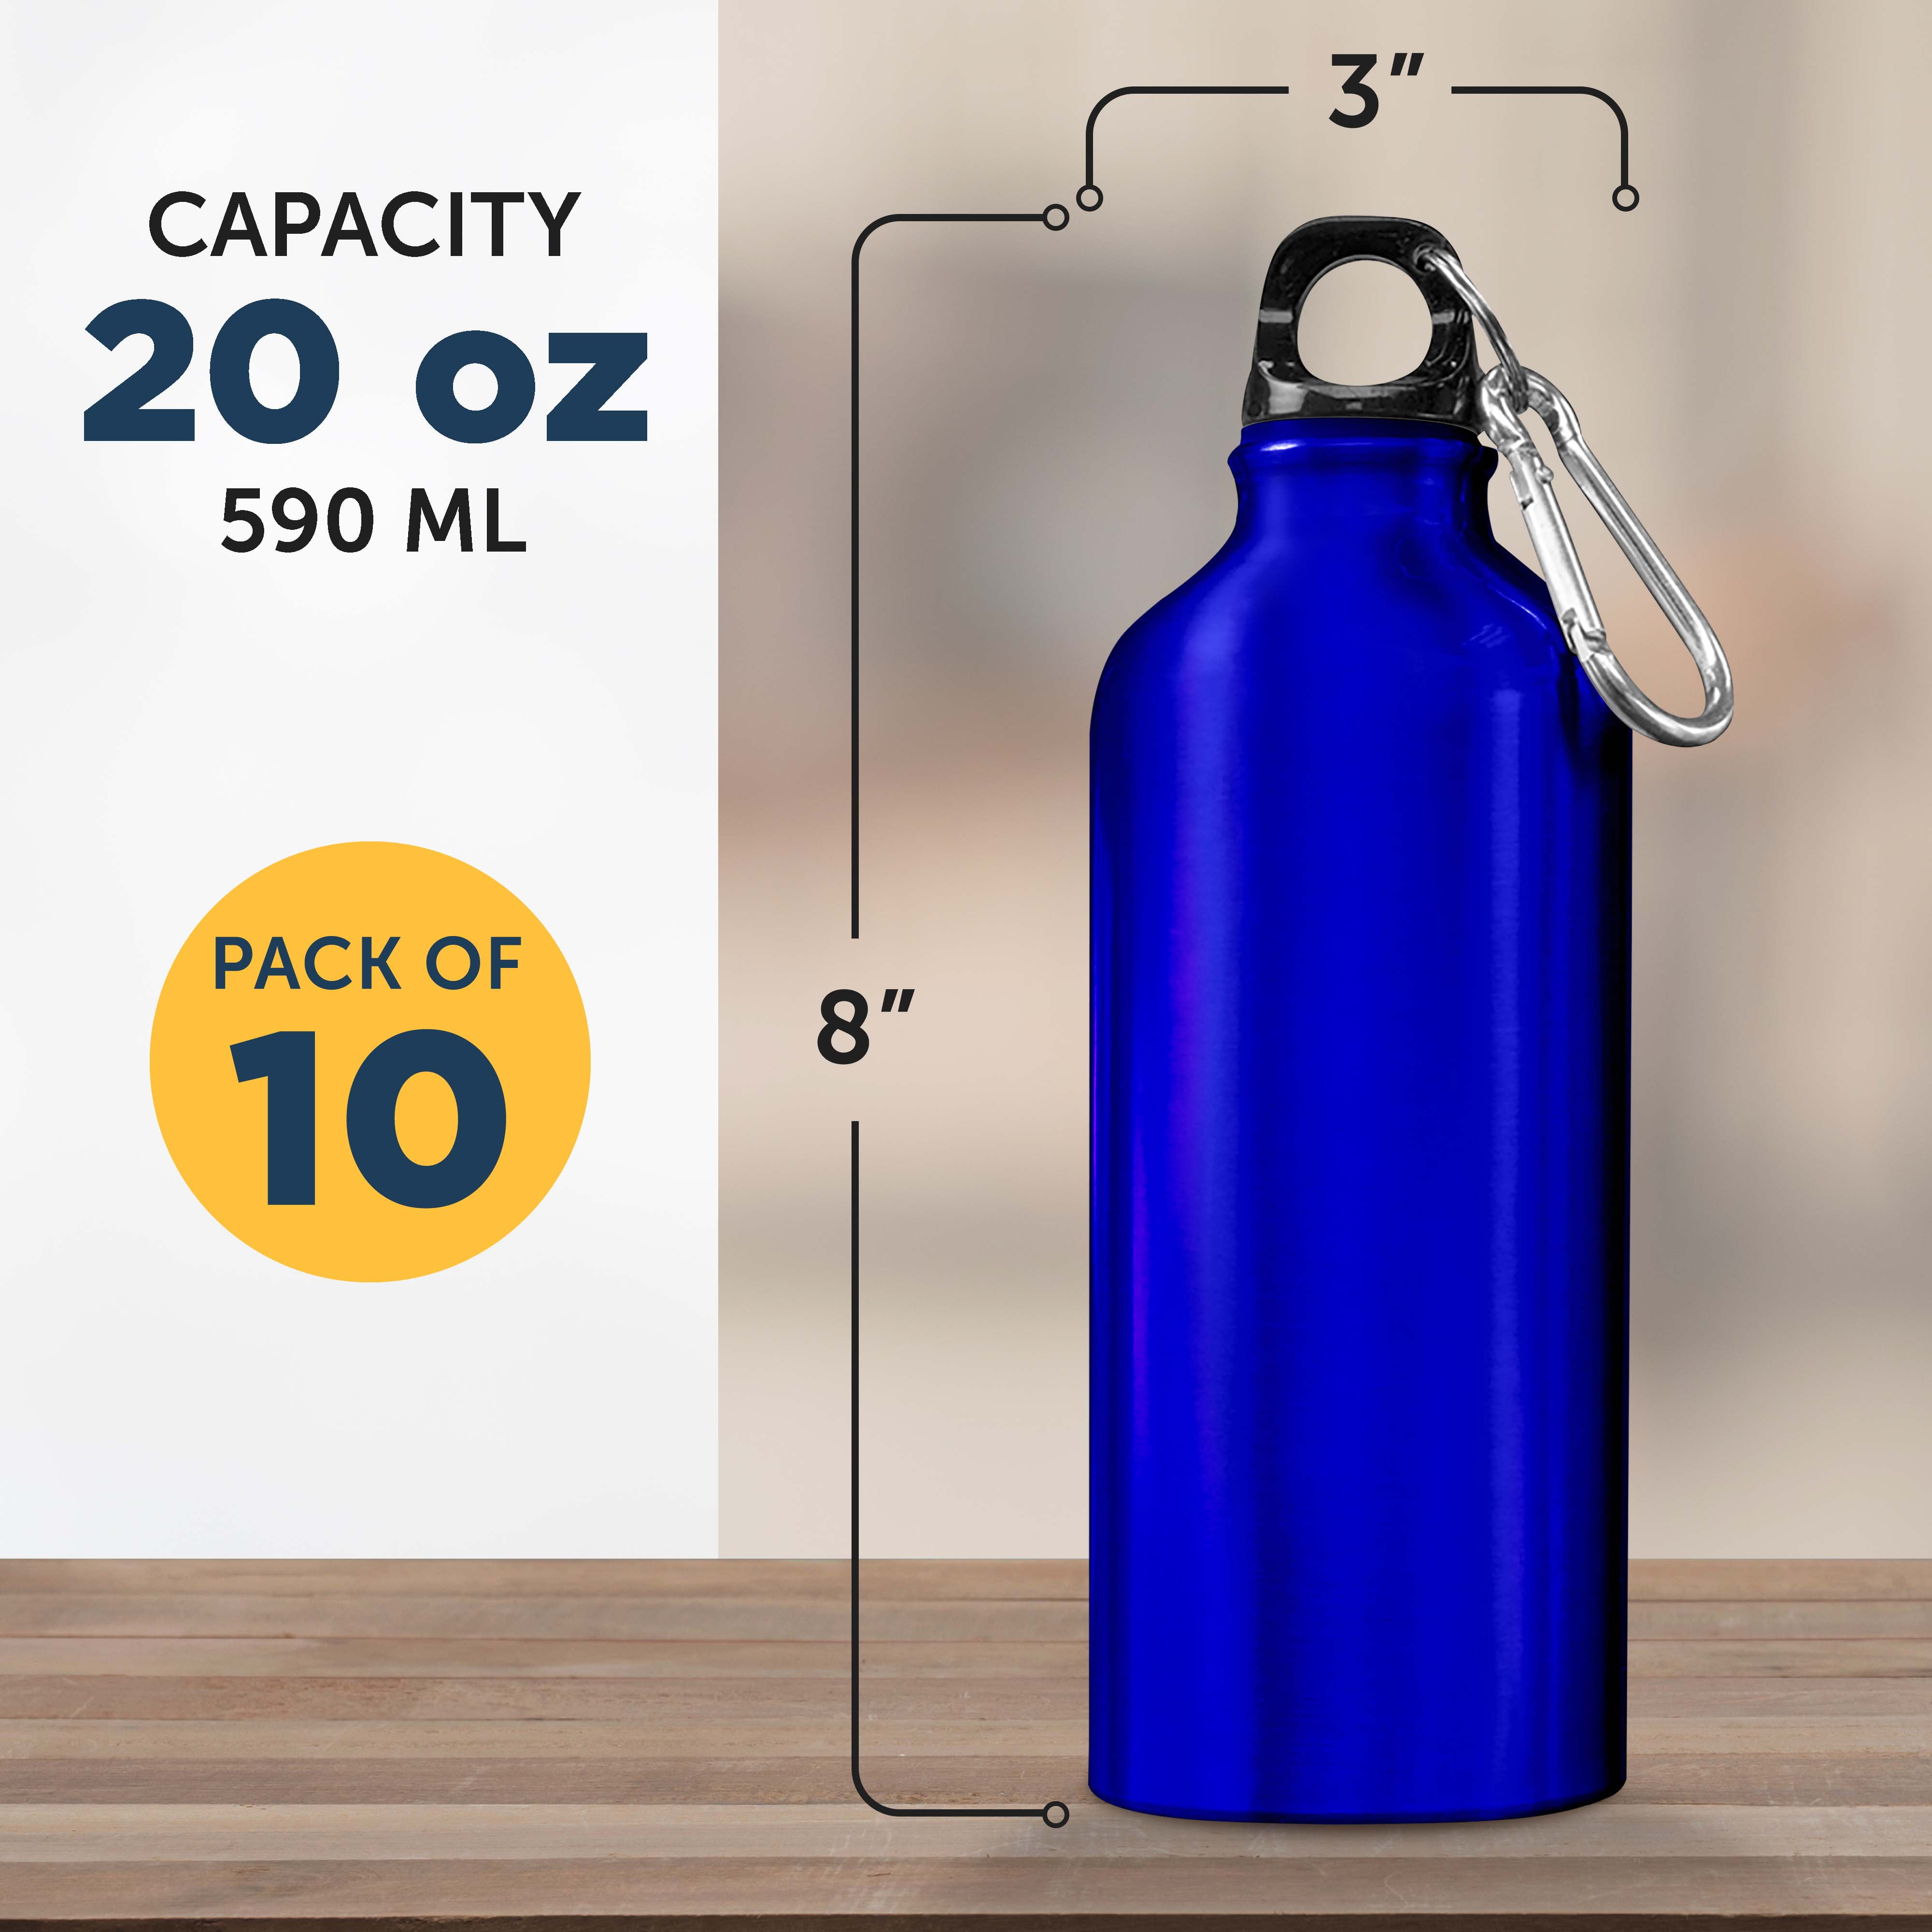 CHENGU 10 Pieces Water Bottle Bulk 20 oz Aluminum Reusable Bottles  Lightweight Snap Lid Water Bottle…See more CHENGU 10 Pieces Water Bottle  Bulk 20 oz